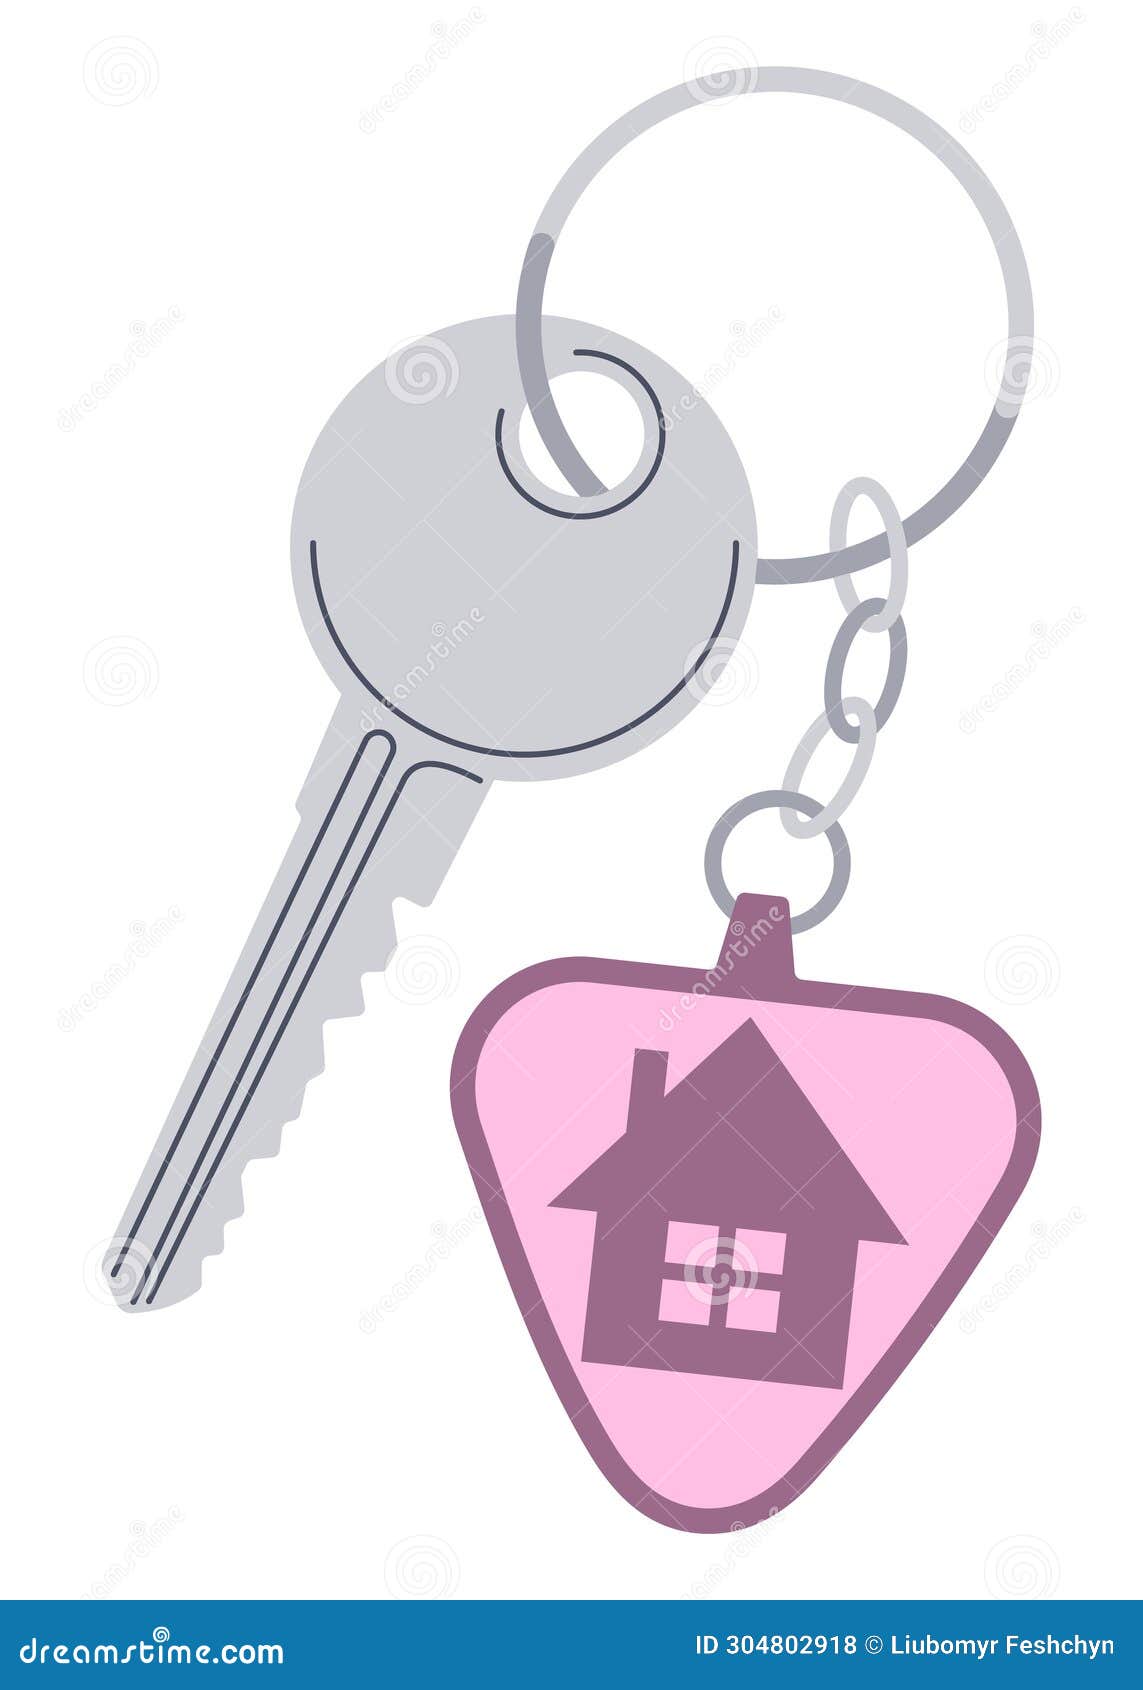 door keys keyfob. ring with trinket, keychains plastic tag hanging on keyring. house, apartment or room locking